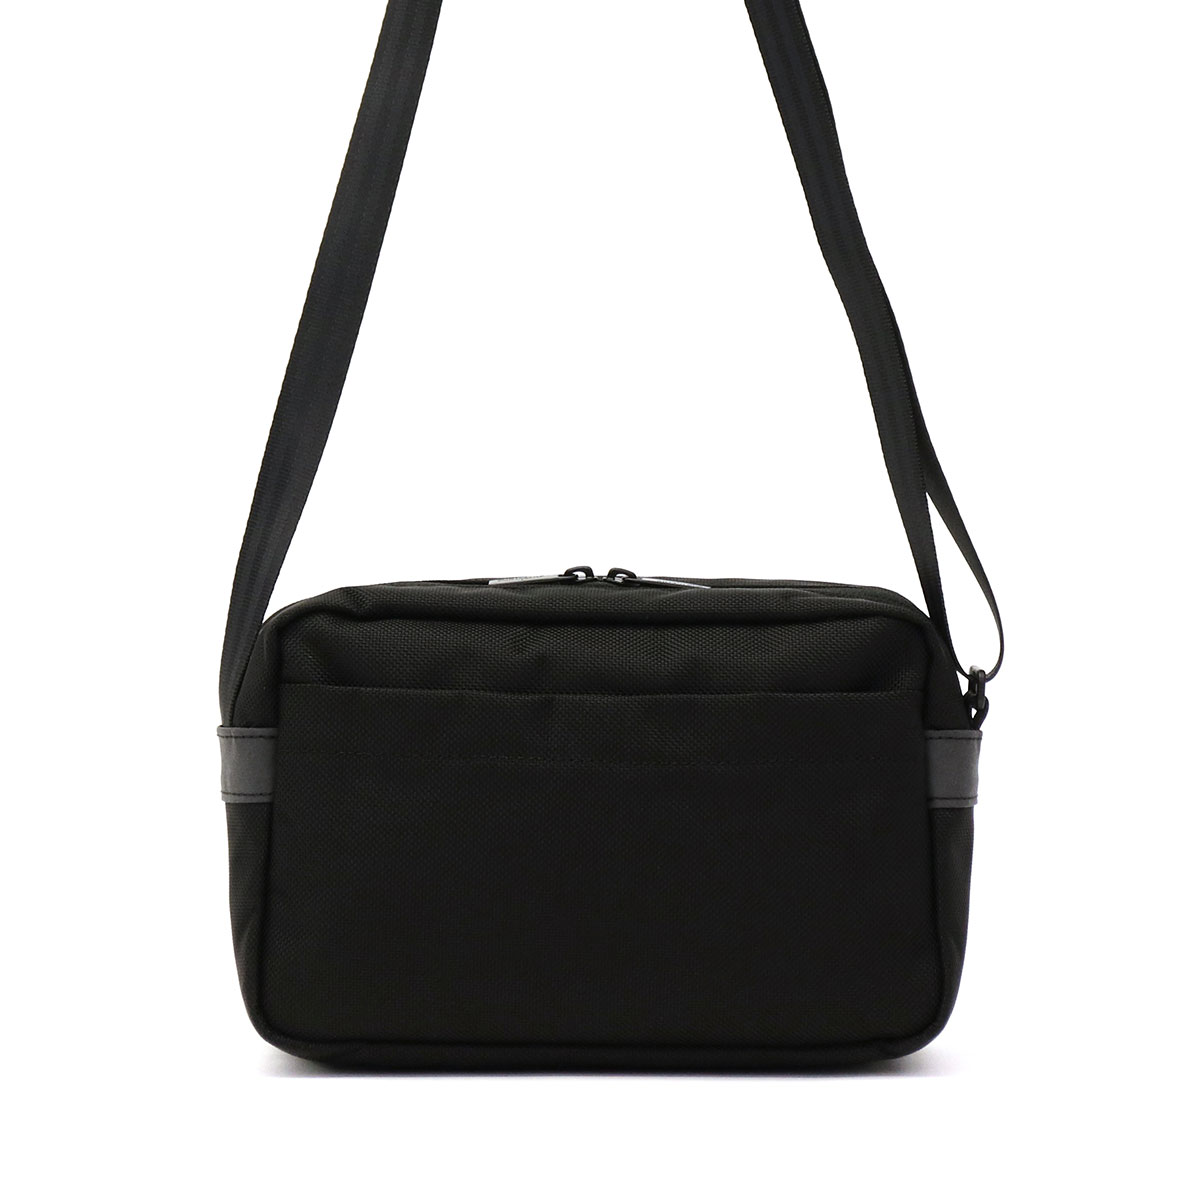 L'Or One-handle Square Bag Black